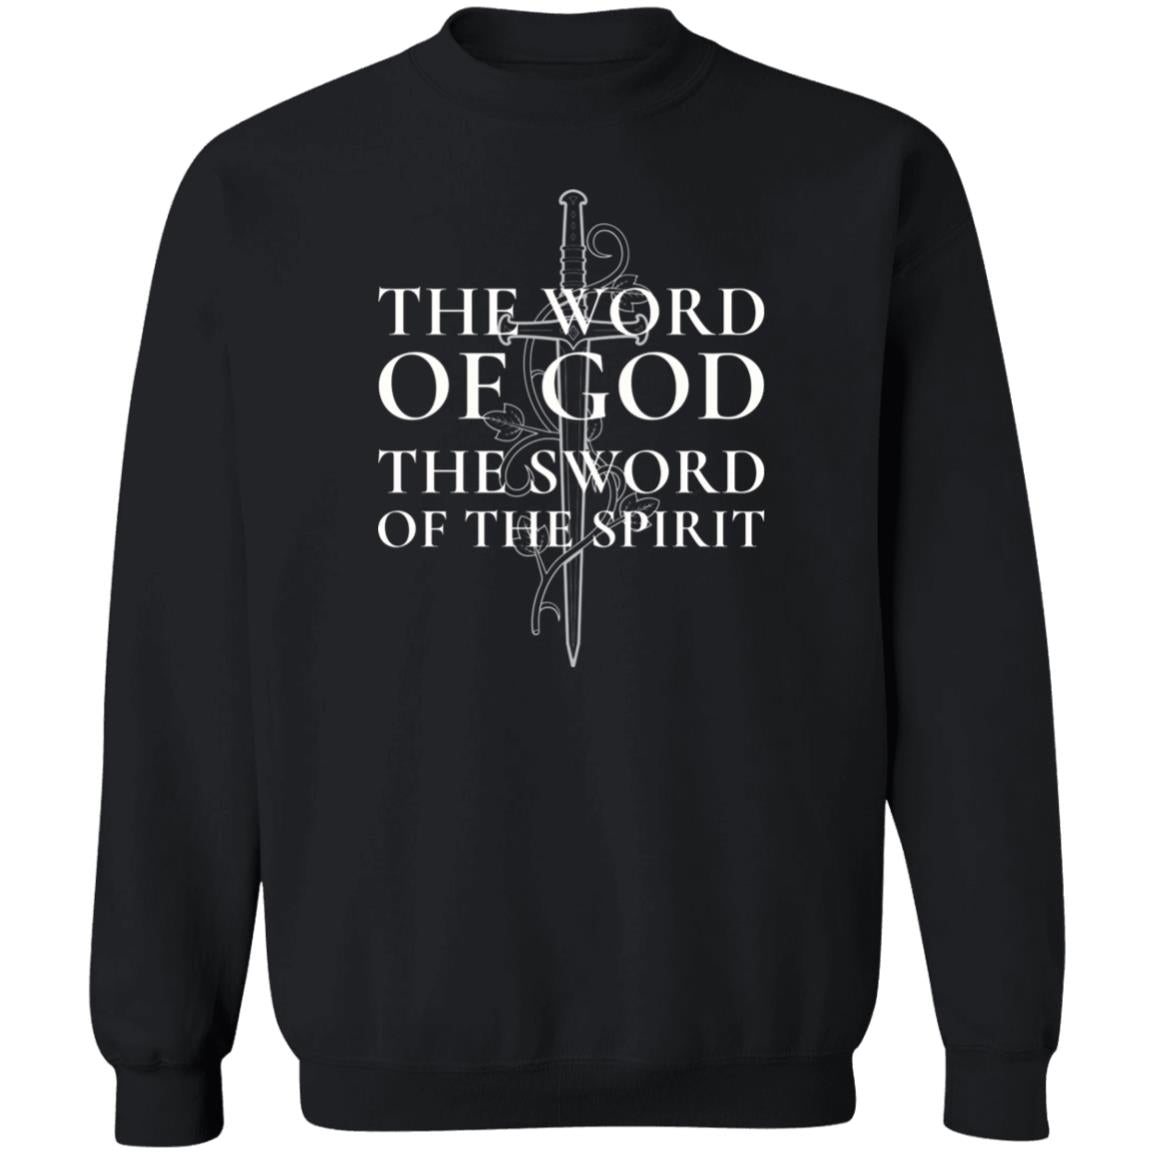 Word of God - Sword of the Spirit (Unisex Sweatshirt)